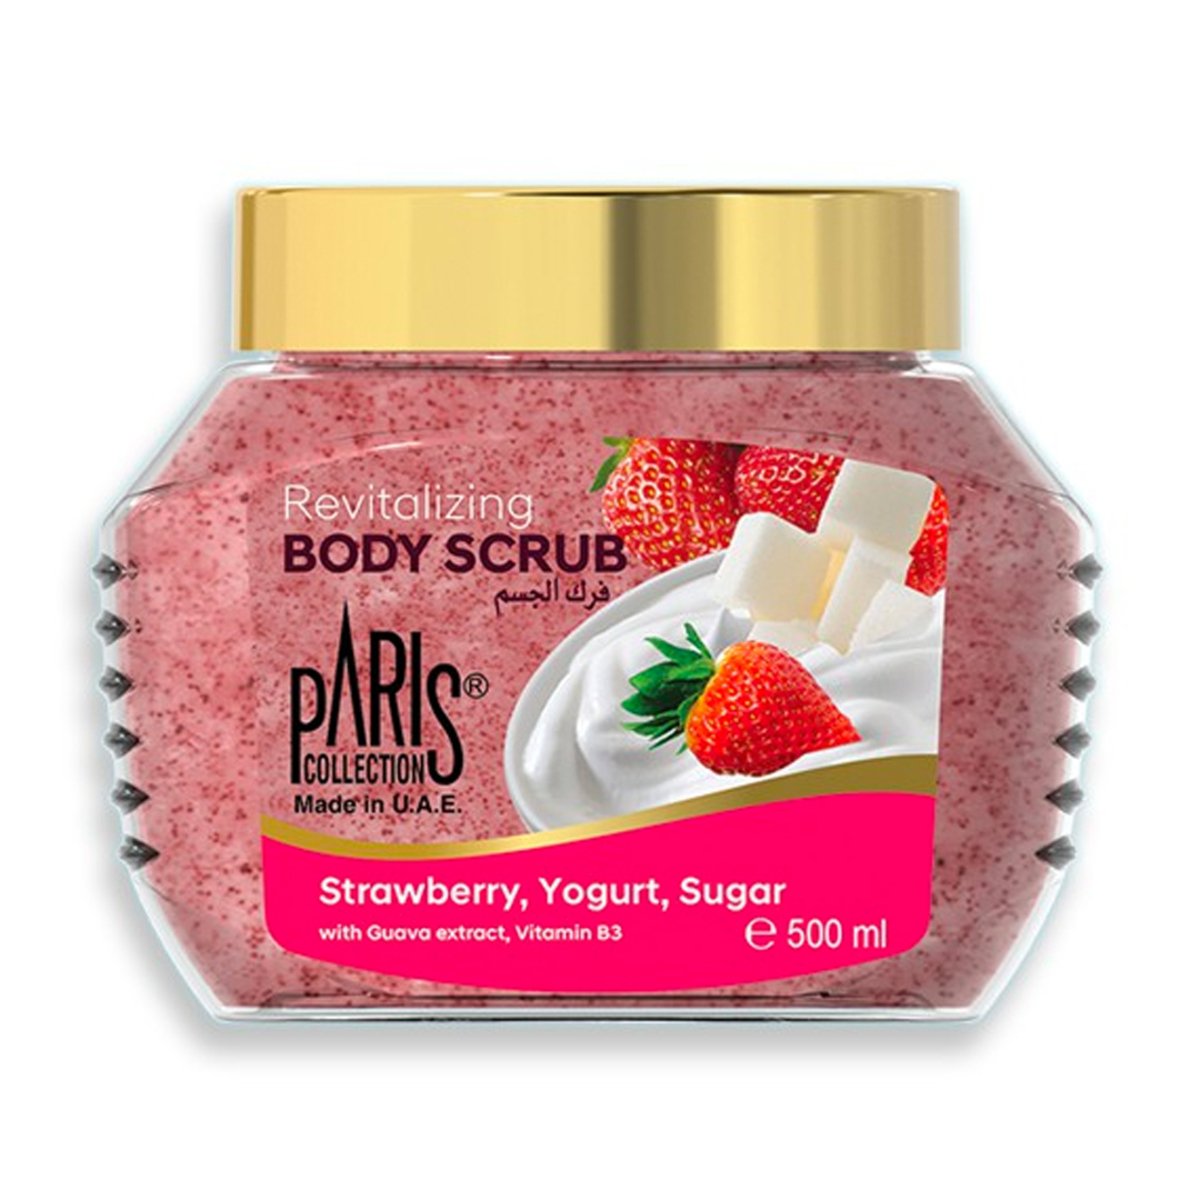 Paris Collection Revitalizing Body Scrub Strawberry,Yogurt,Sugar 500ml